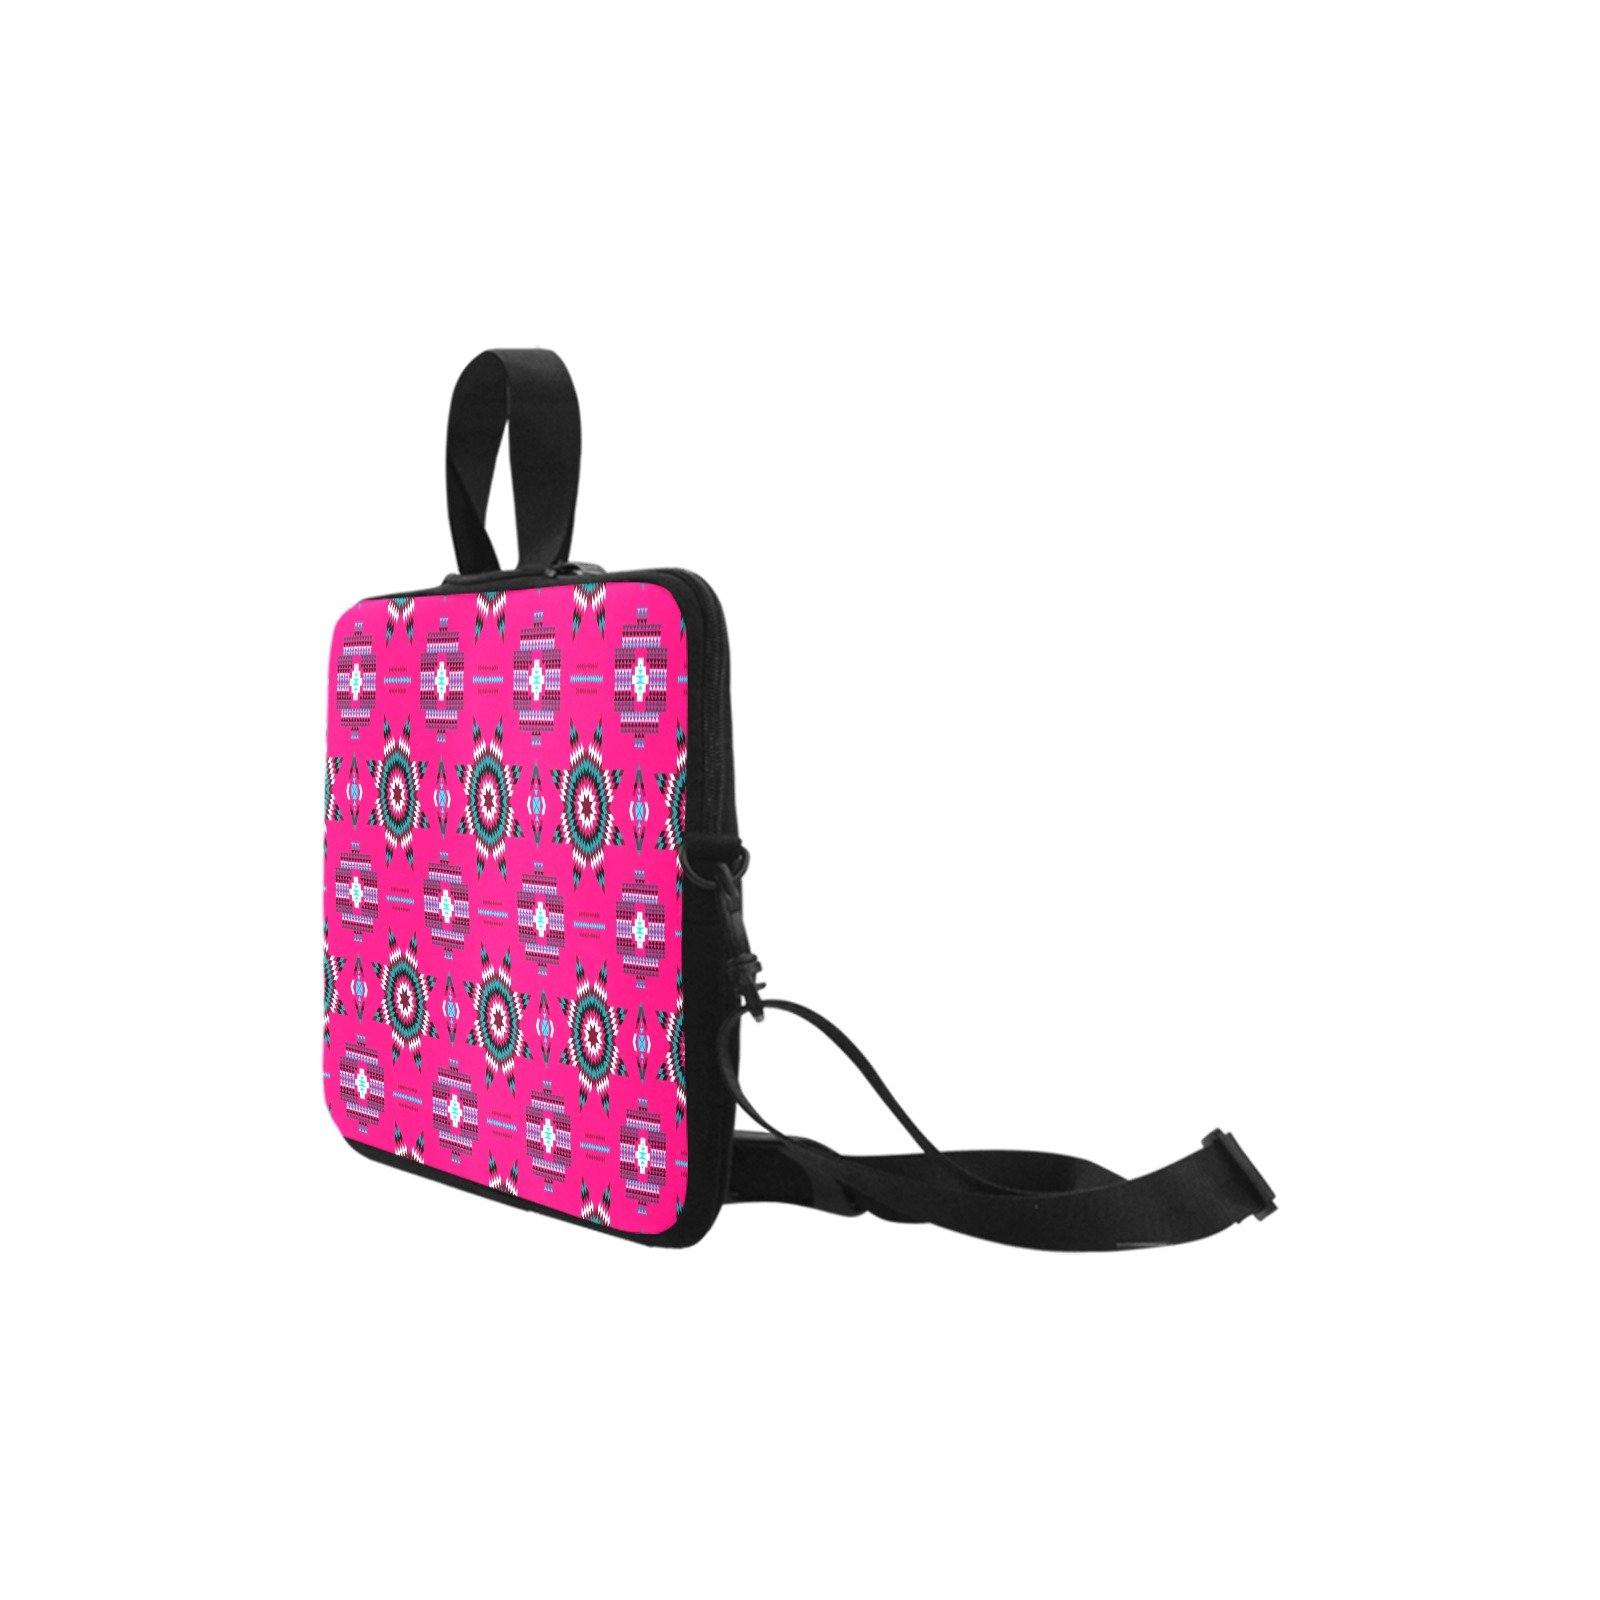 Rising Star Strawberry Moon Laptop Handbags 14" bag e-joyer 